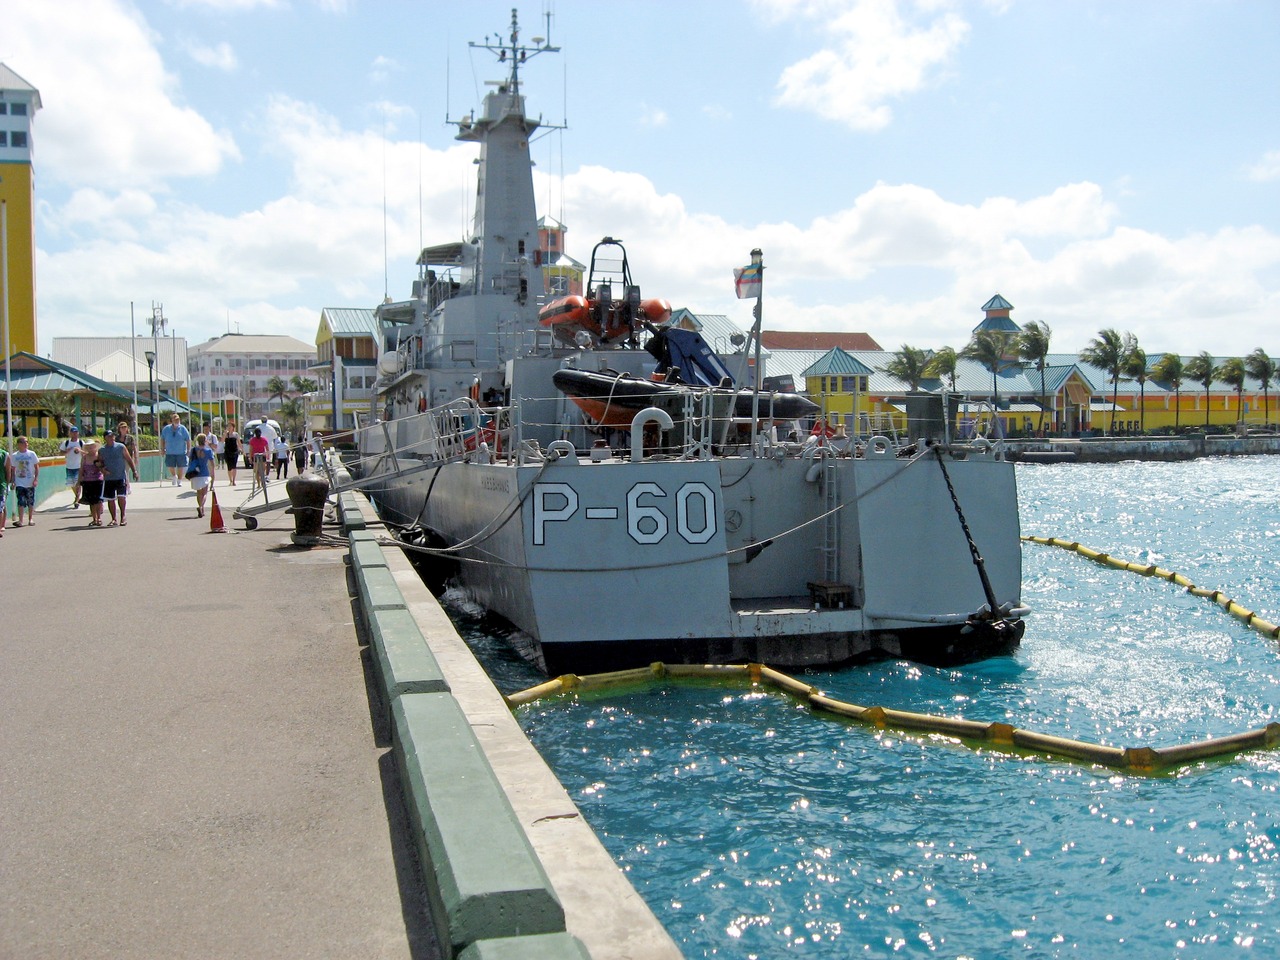 Royal Bahamas Defence Force offshore patrol vessel HMBS Bahamas P-60 docked at Prince George Wharf, Port of Nassau.